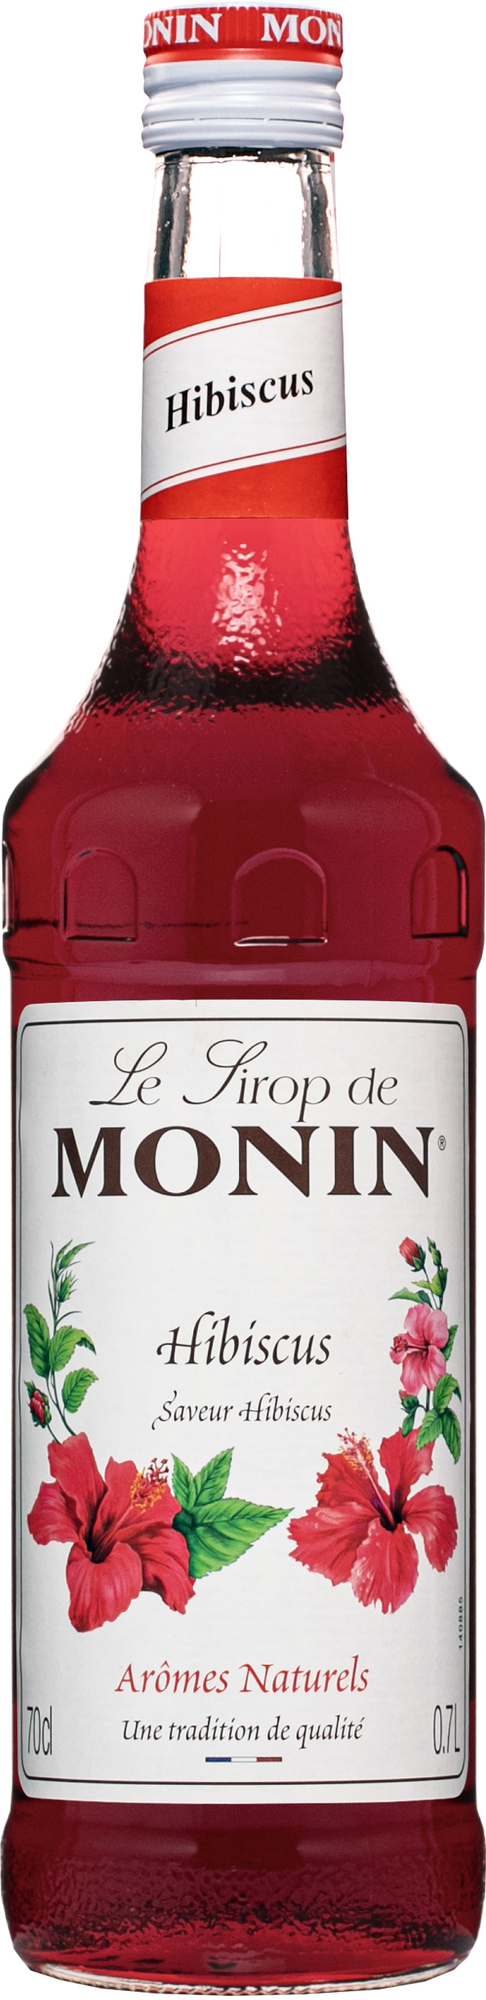 Monin - Hibiscus Syrup, Unique Floral Flavor, Great for Cocktails, Teas, &  Lemonades, Gluten-Free, Non-GMO (1 Liter)